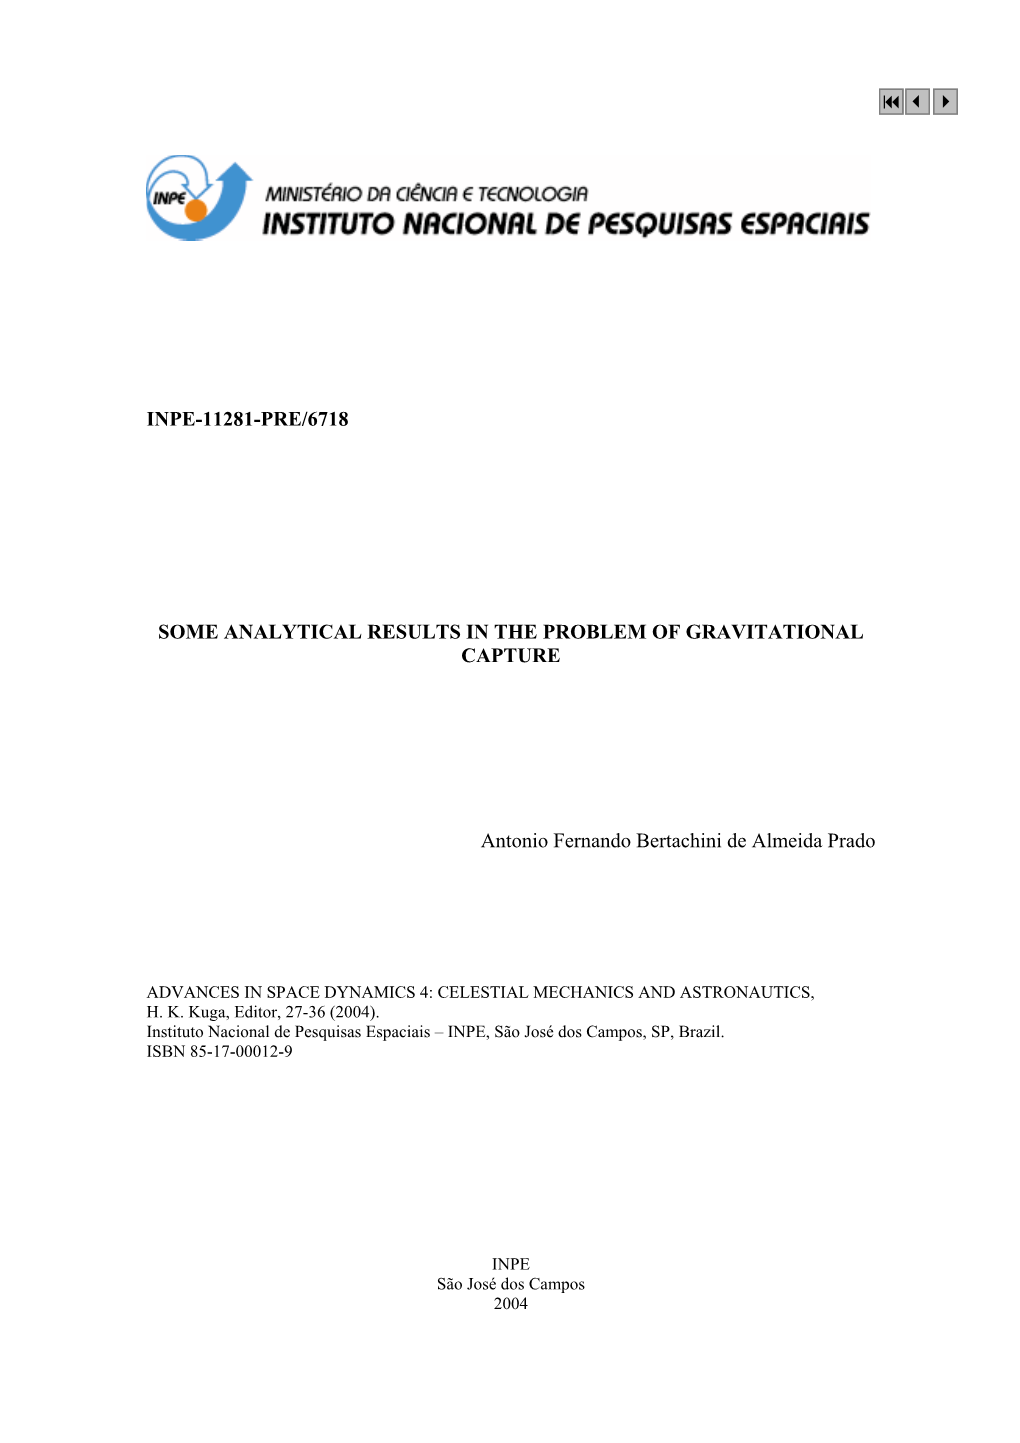 INPE-11281-PRE/6718 SOME ANALYTICAL RESULTS in the PROBLEM of GRAVITATIONAL CAPTURE Antonio Fernando Bertachini De Almeida Prado